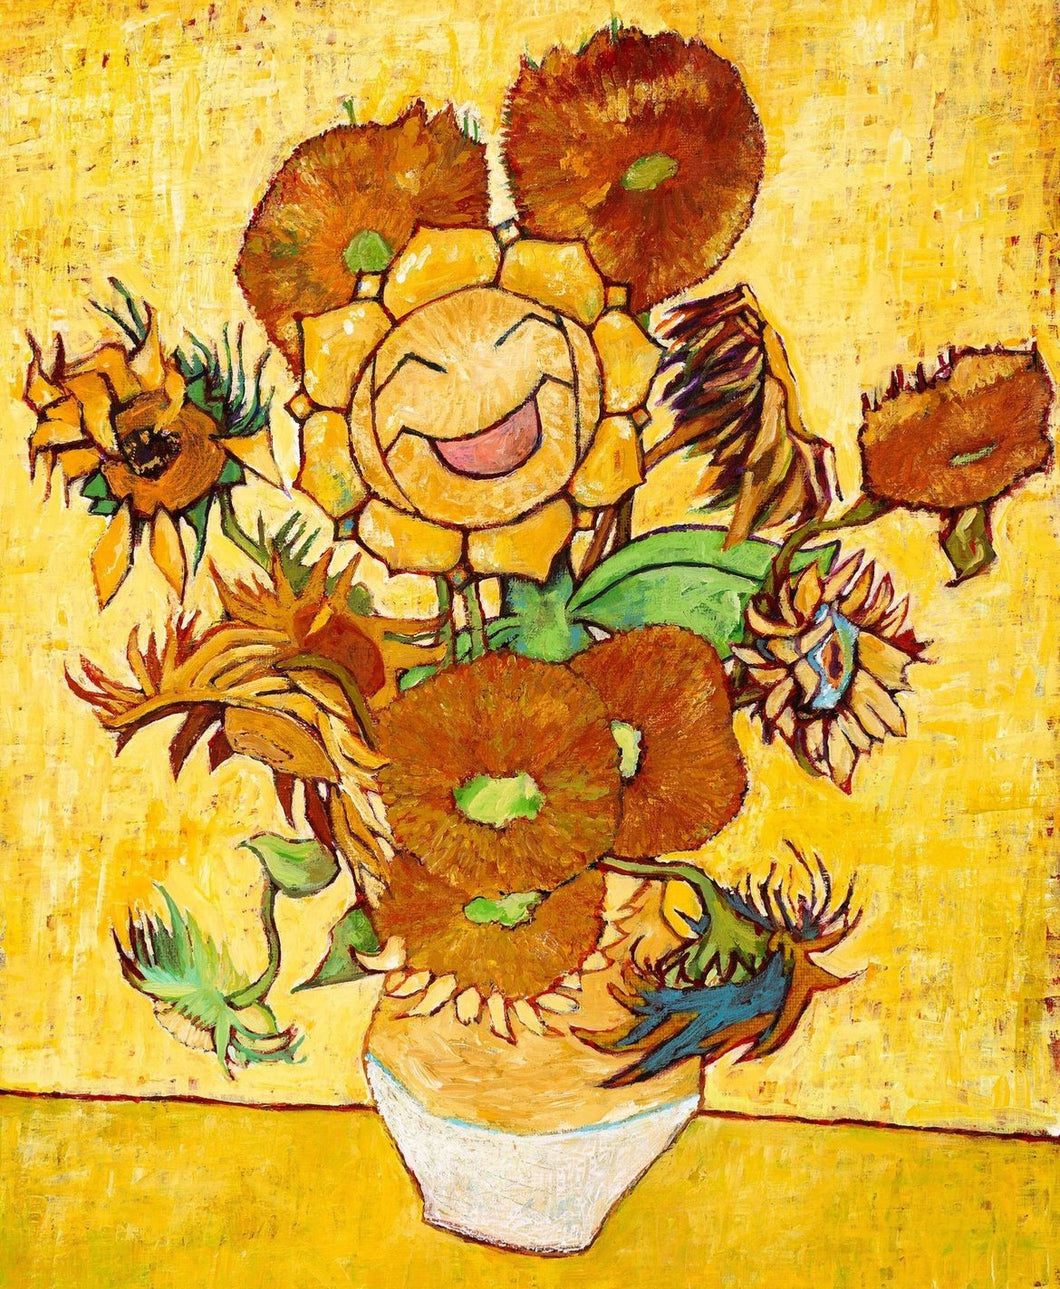 Pokémon - Sunflora inspired by Sunflowers (Small Canvas) (Pokémon centre x Van Gogh Museum)